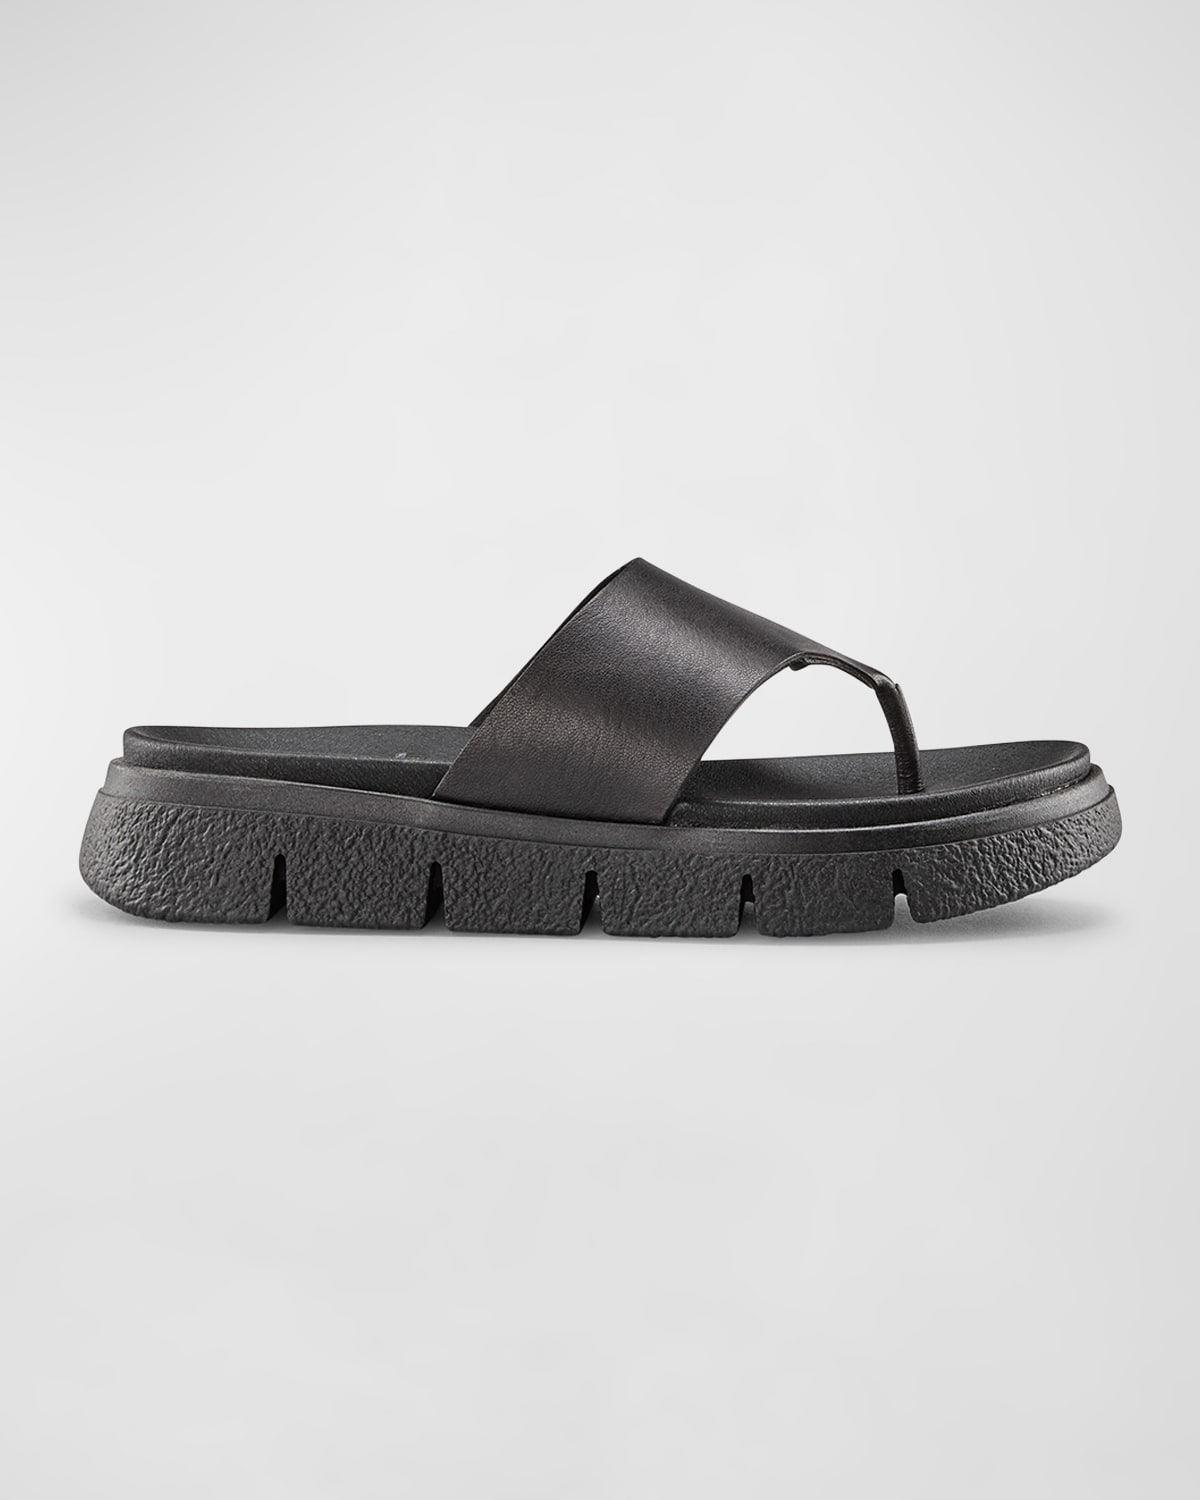 Ponyo Leather Thong Slide Sandals